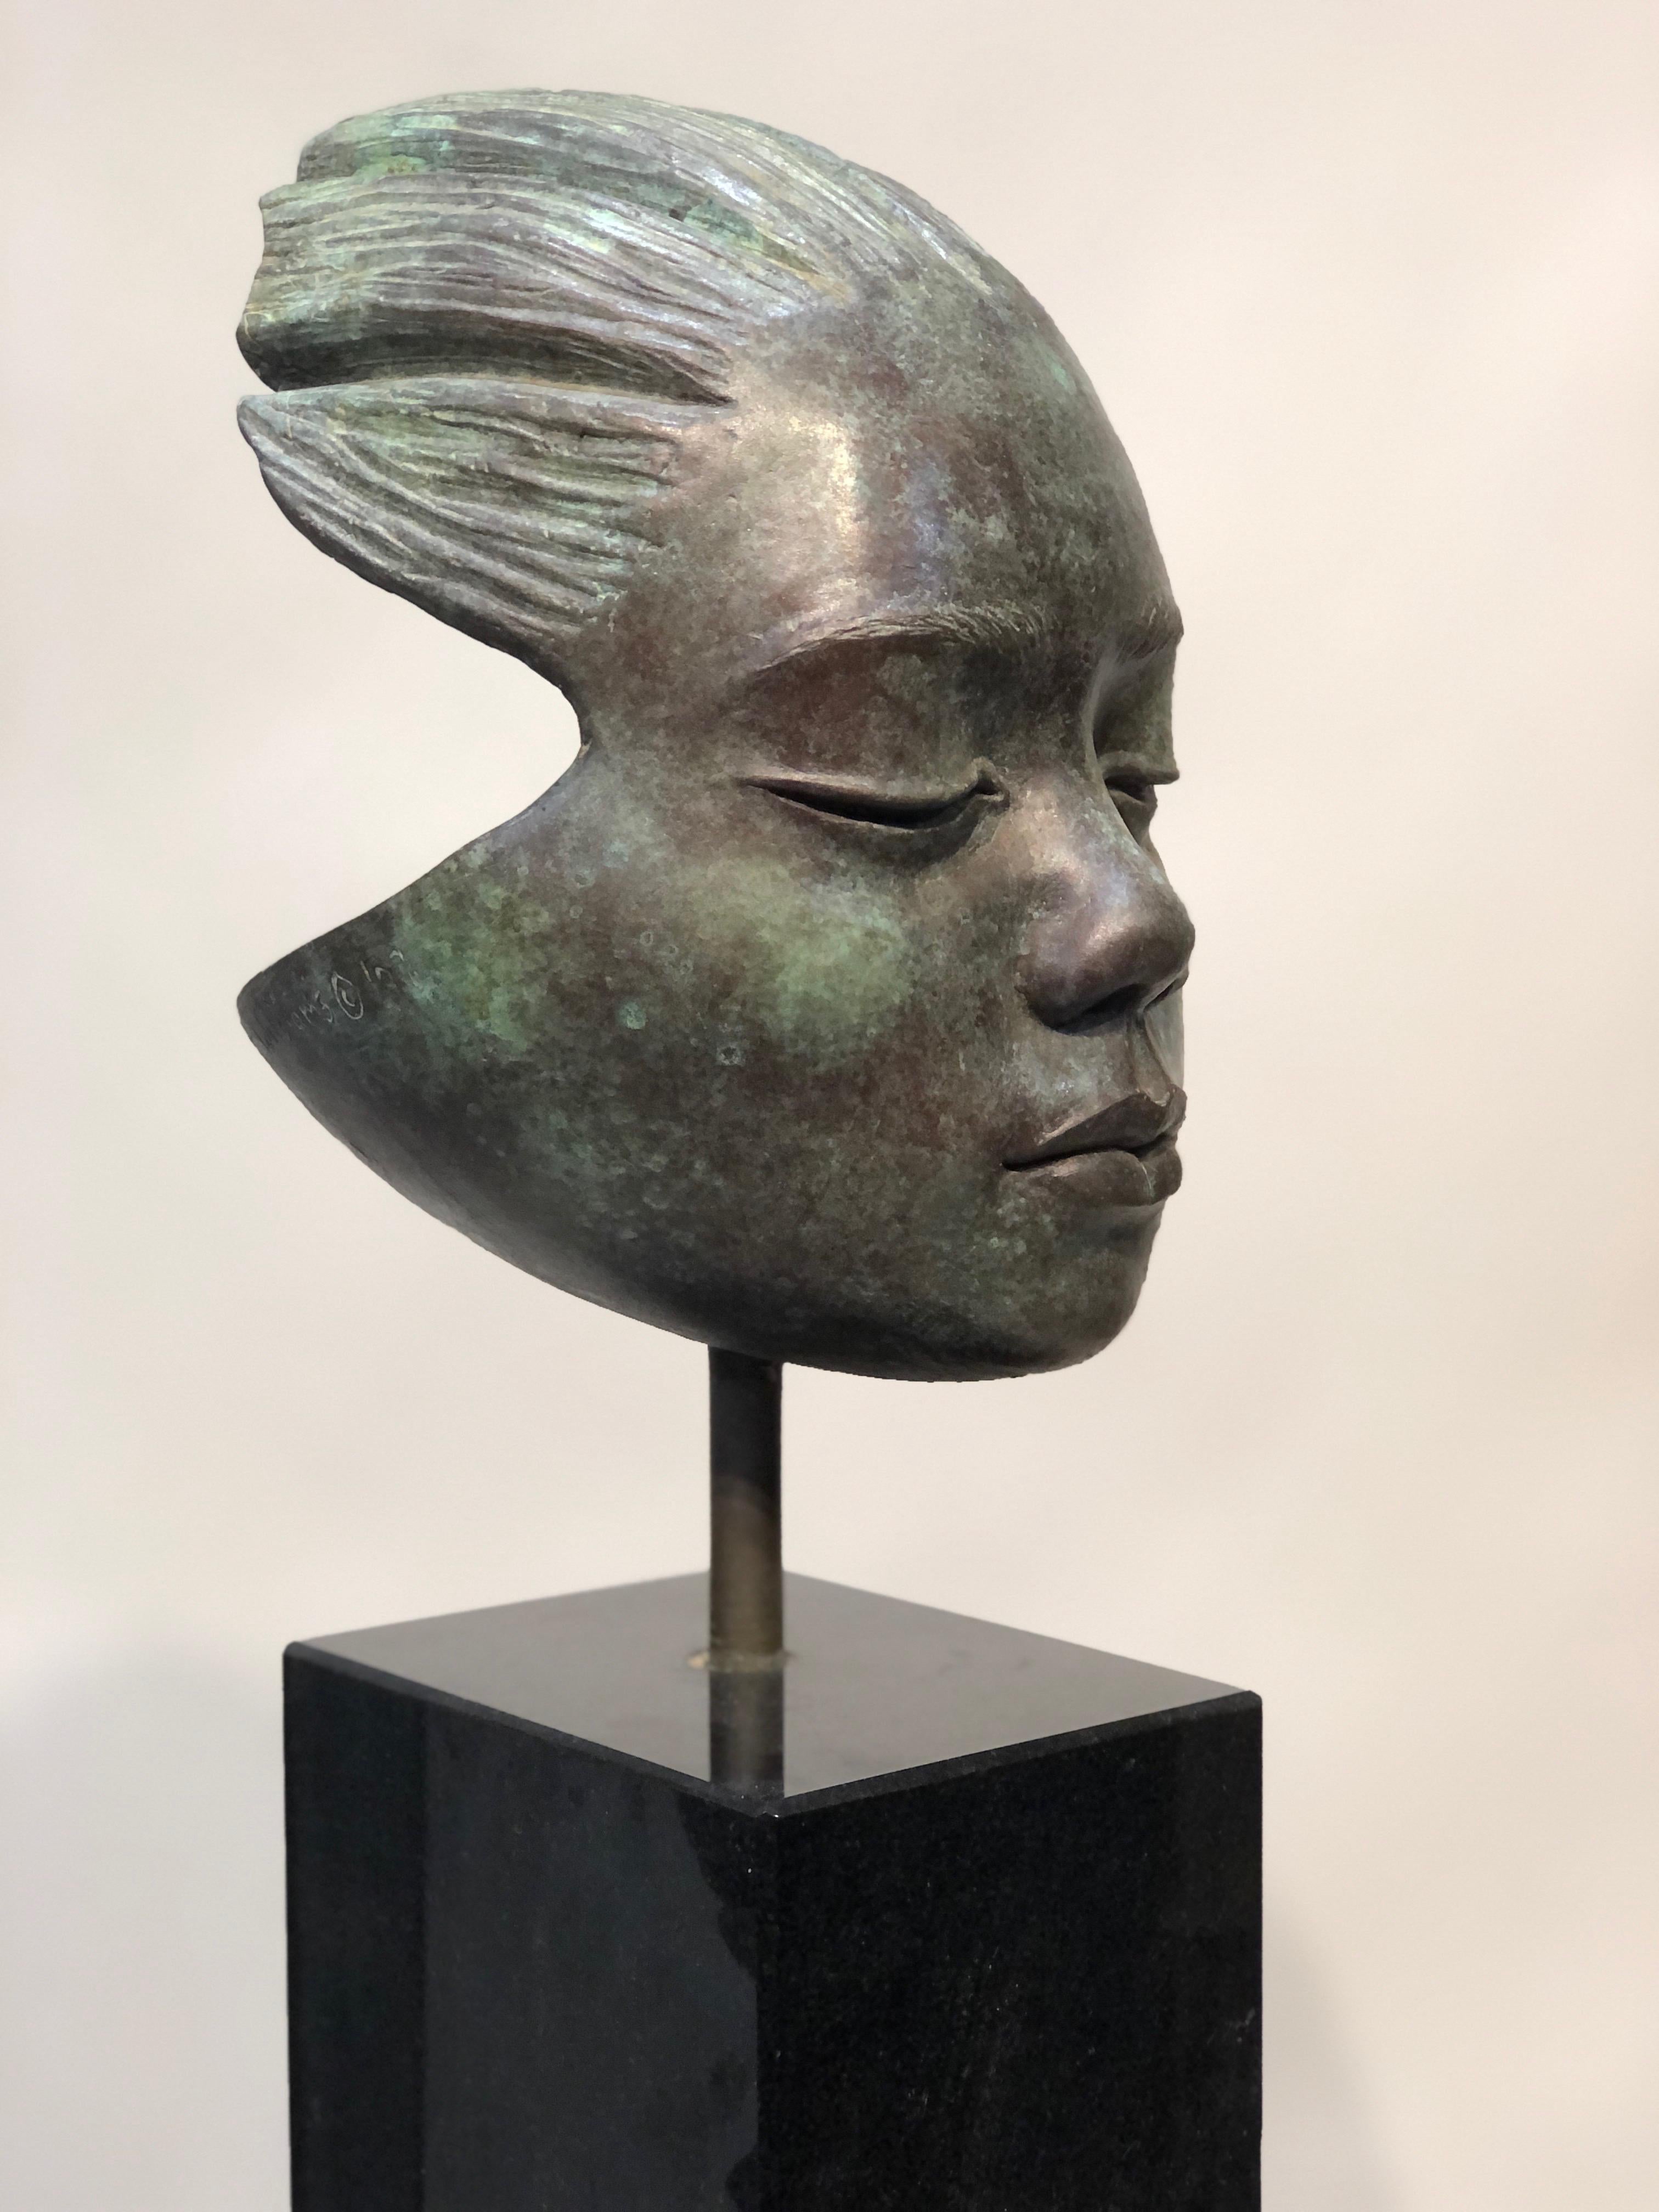 Troy Williams Figurative Sculpture - Listening, bronze sculpture, childs portrait, black granite base, green patina